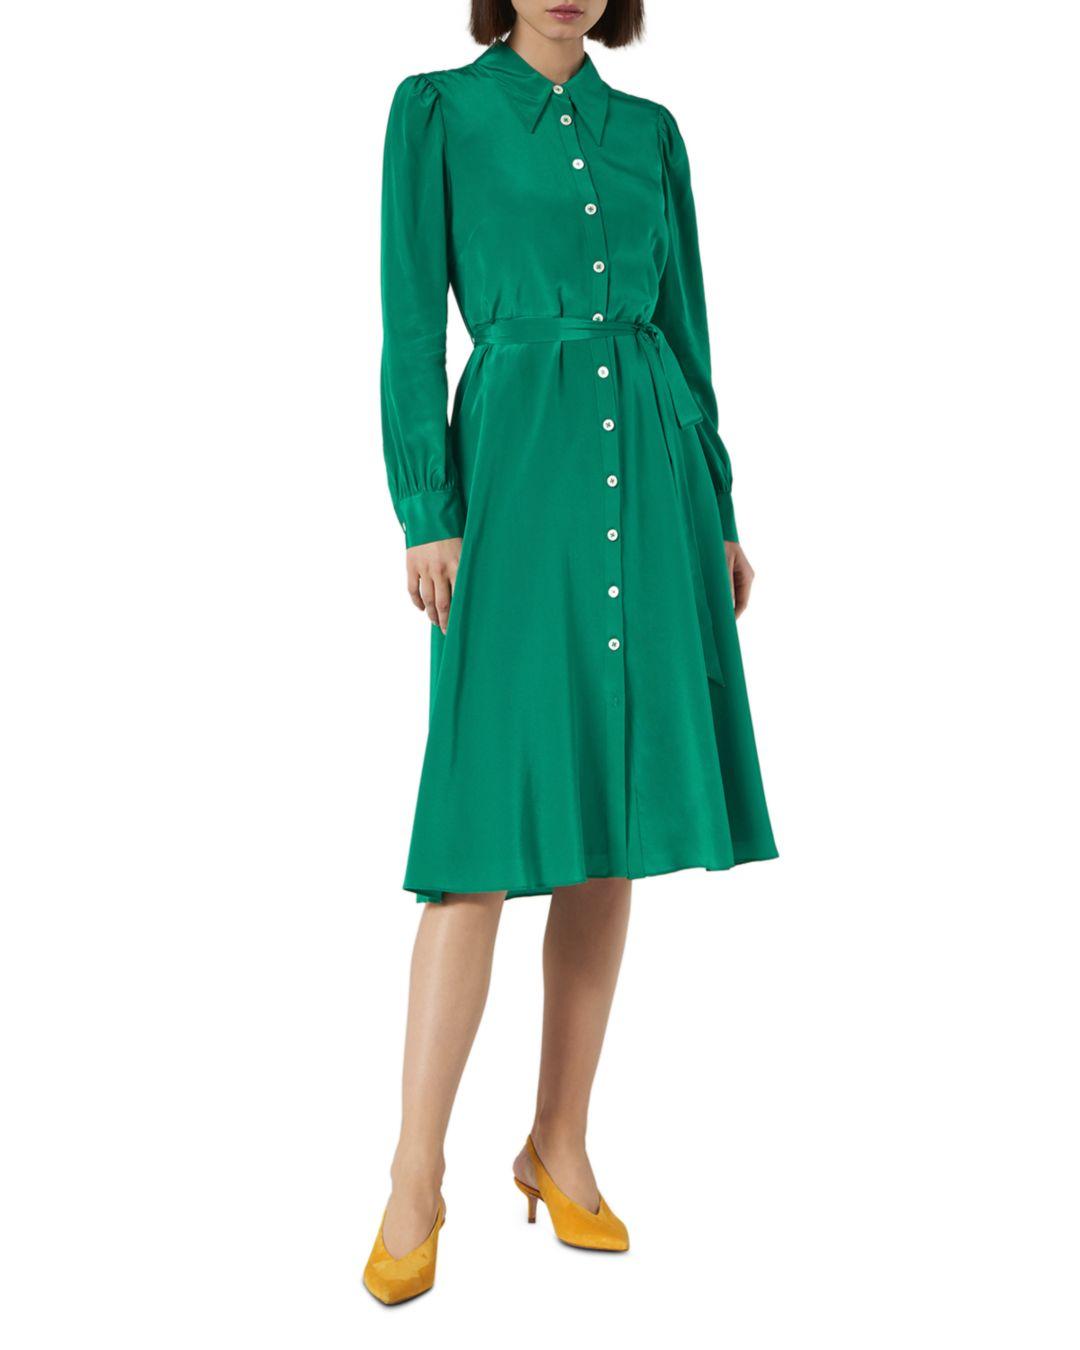 LK Bennett Runa Tie Waist Shirt Silk Dress in Green Malachite (Green) - Lyst